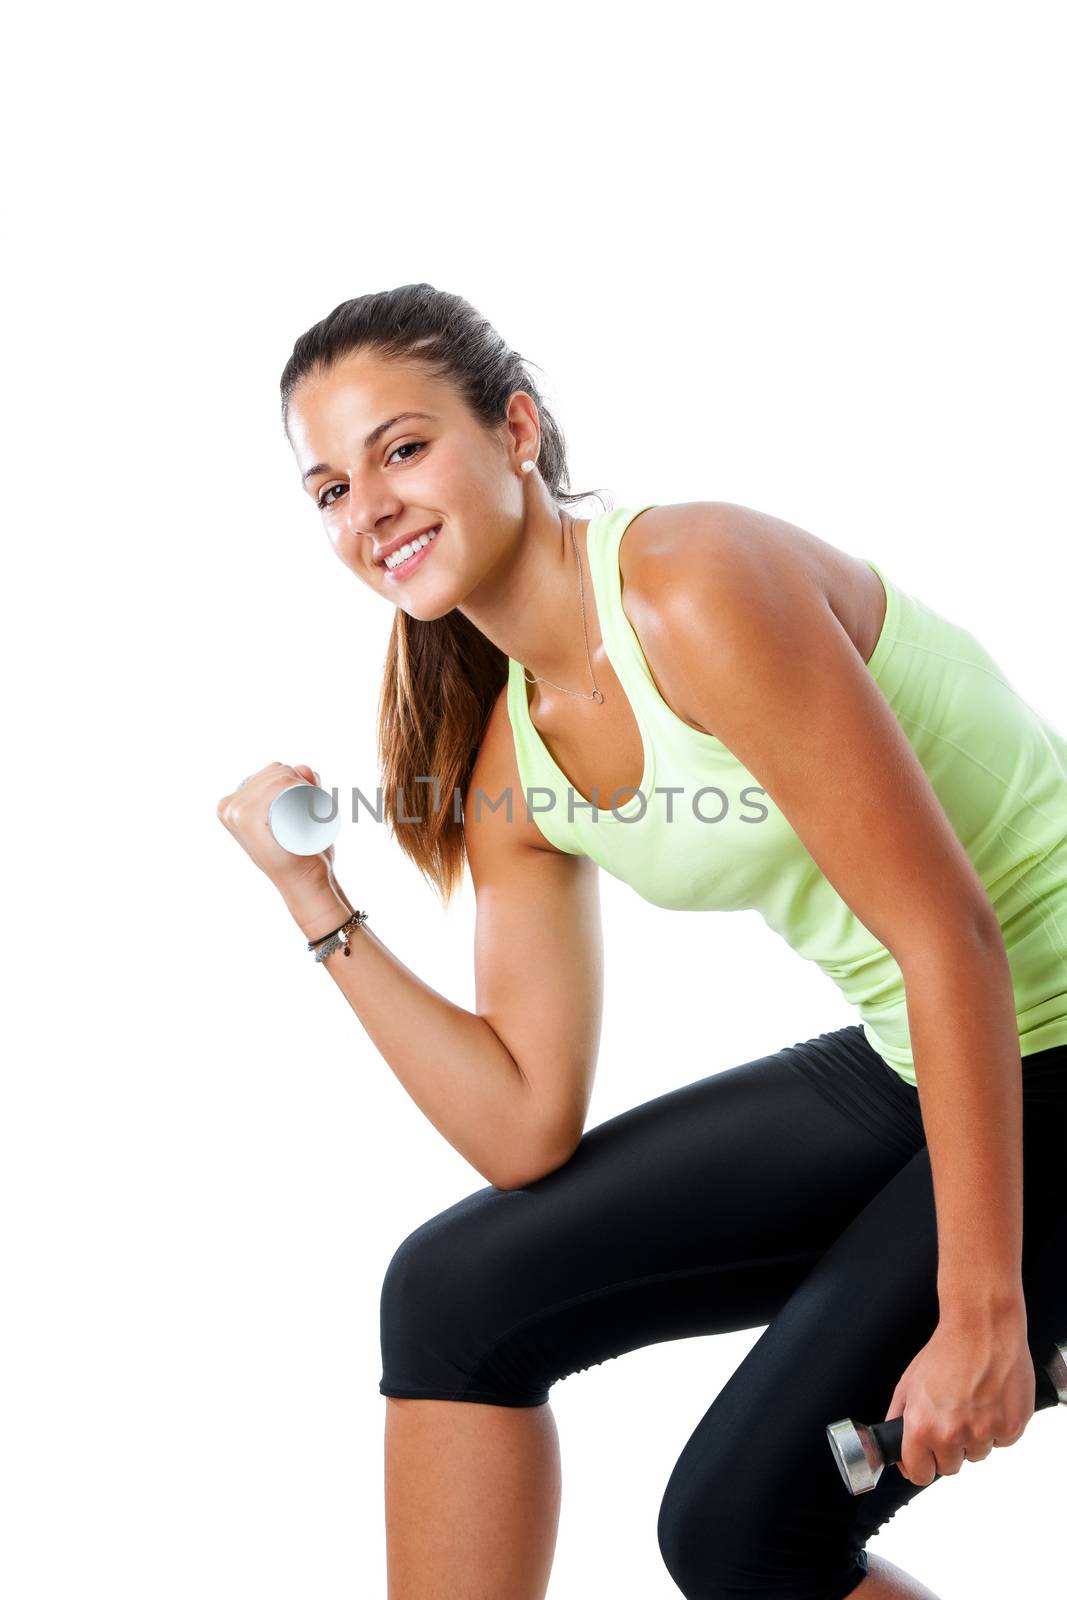 Teen girl doing bicep exercise. by karelnoppe